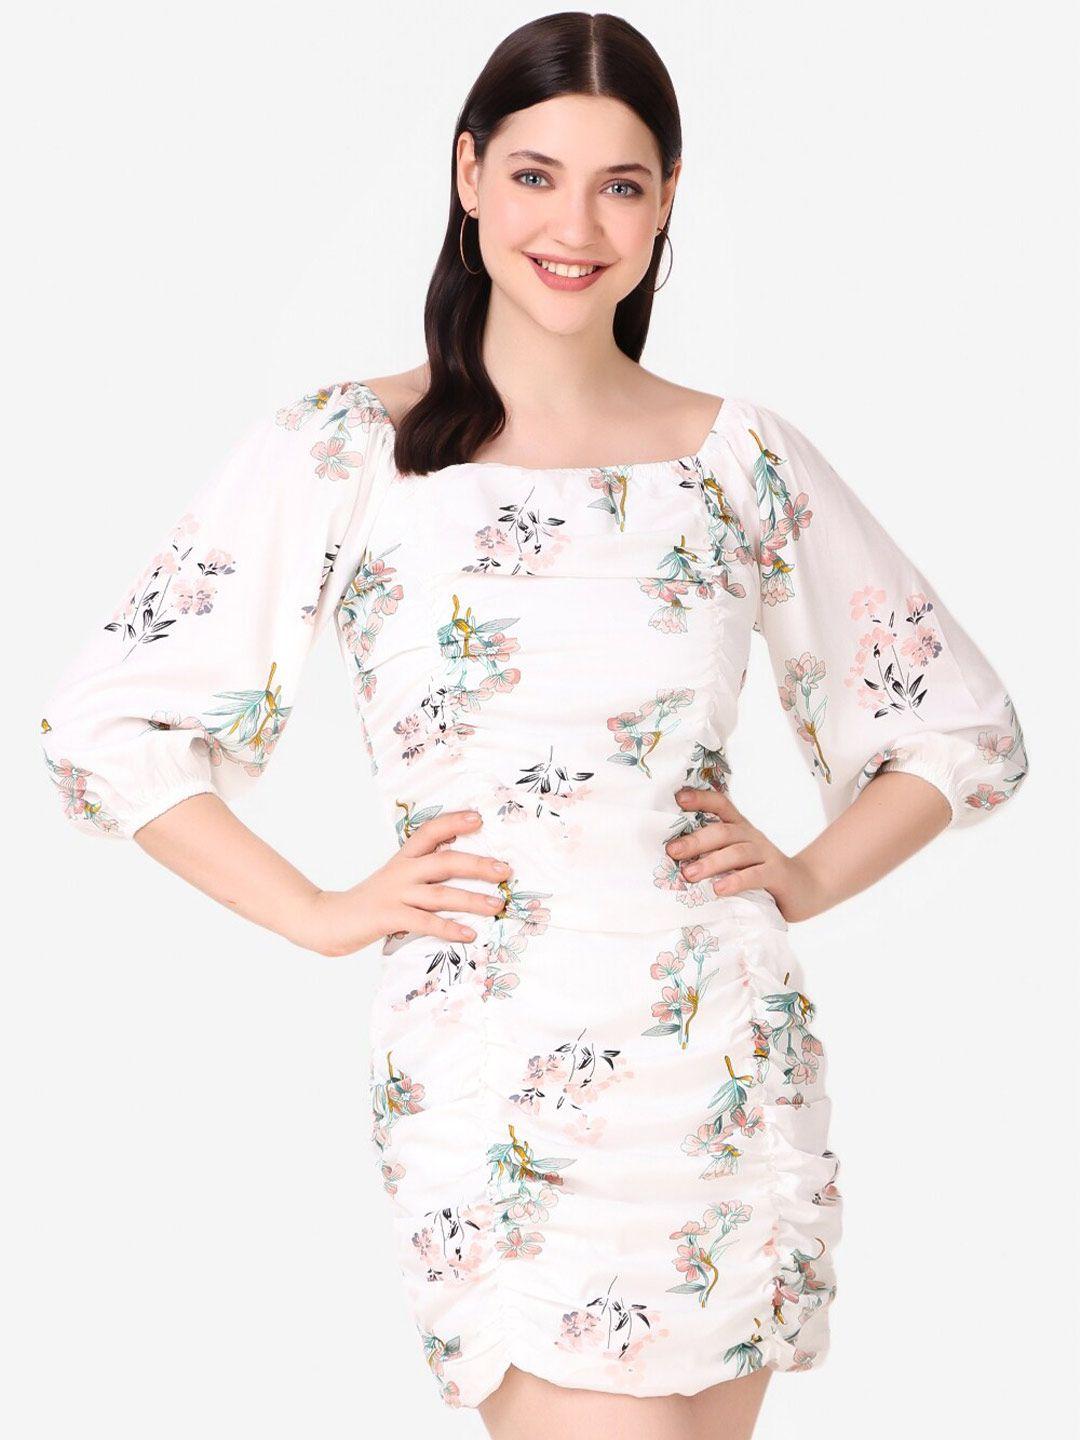 taggd floral printed ruched georgette mini sheath dress